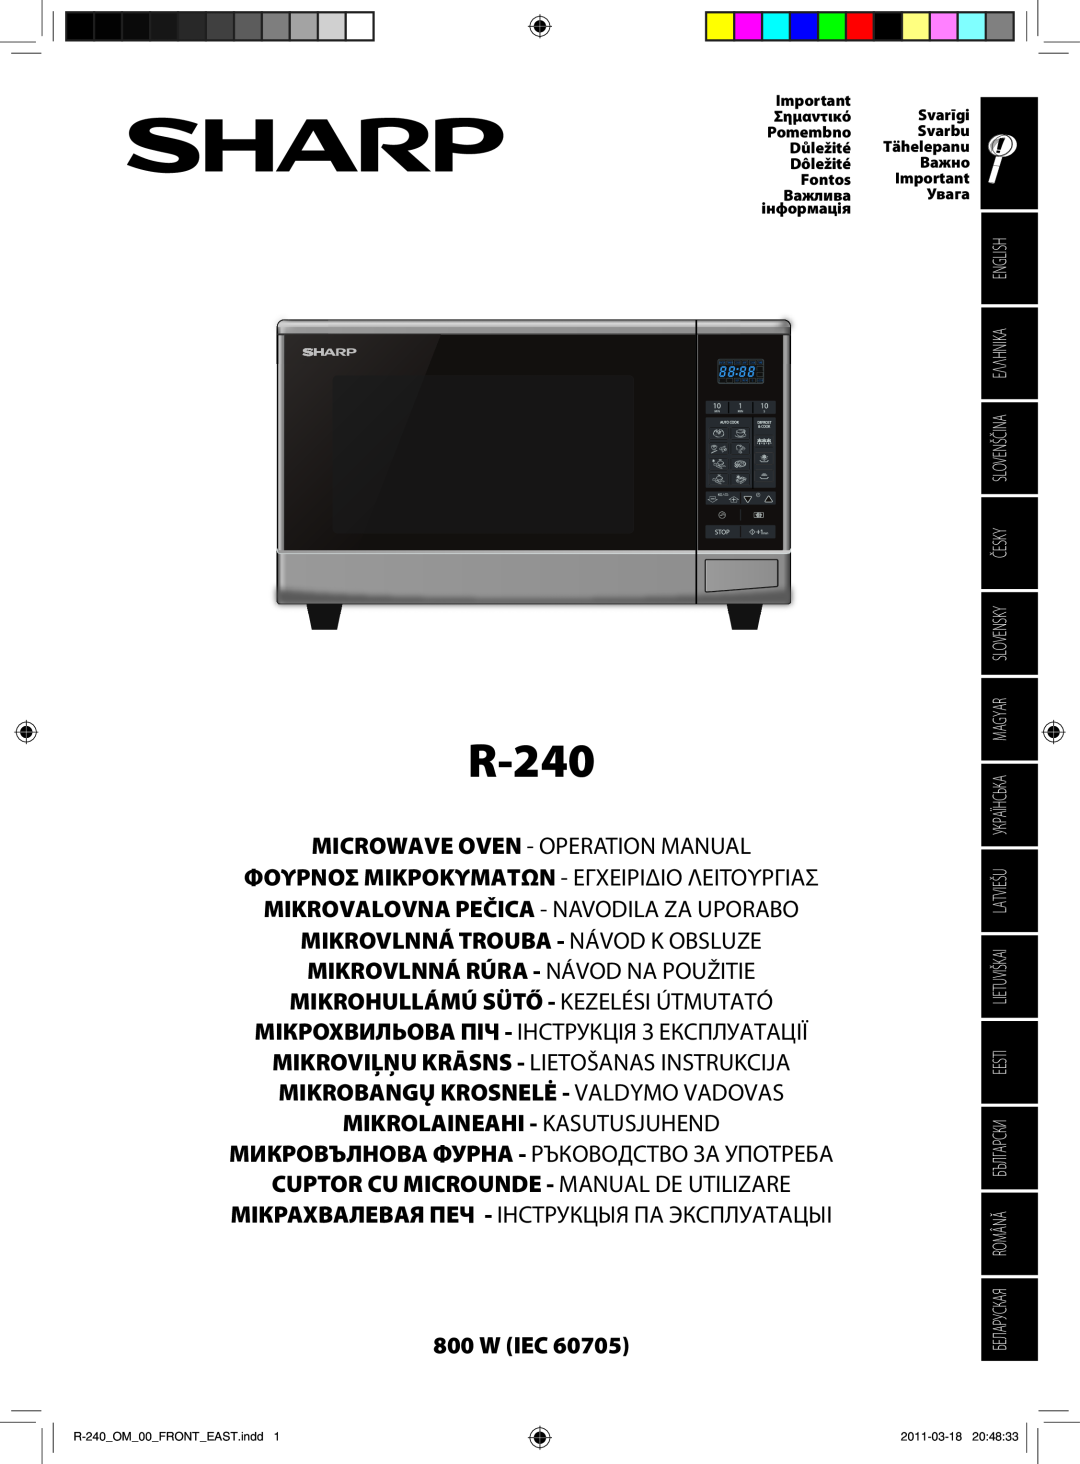 Sharp R-240 manual Микровълнова Фурна - Ръководство За Употреба, Cuptor Cu Microunde - Manual De Utilizare, W Iec 